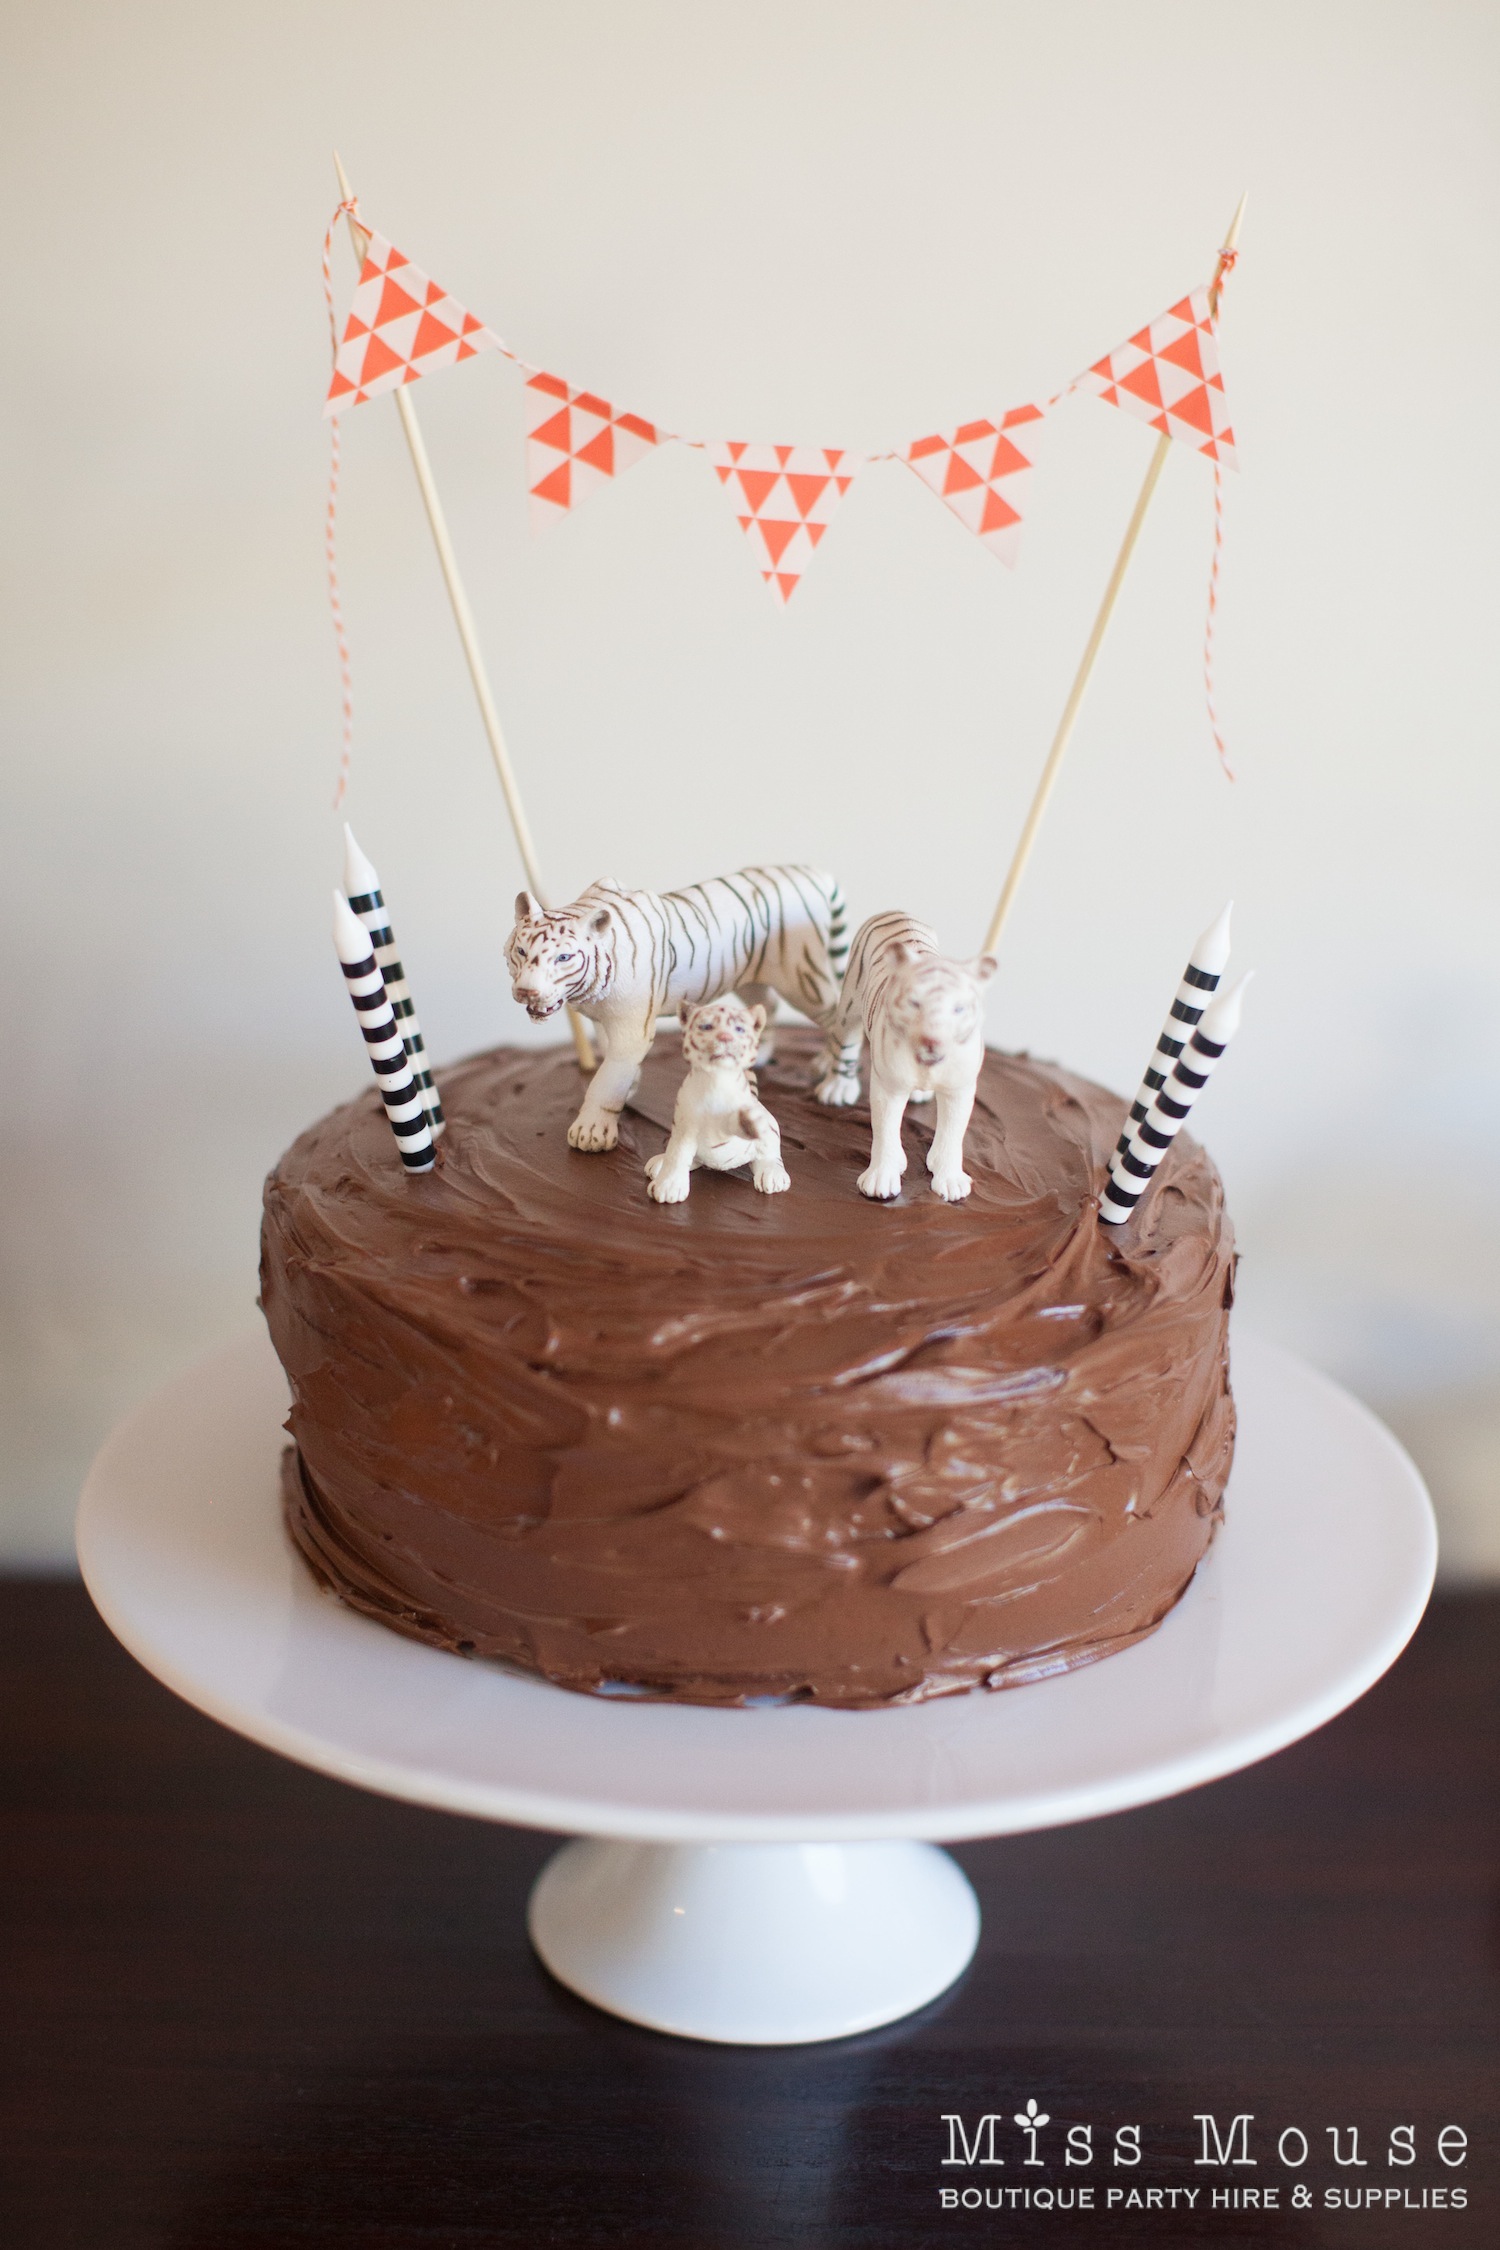 21st Birthday Cakes – Decoration Ideas | Little Birthday Cakes